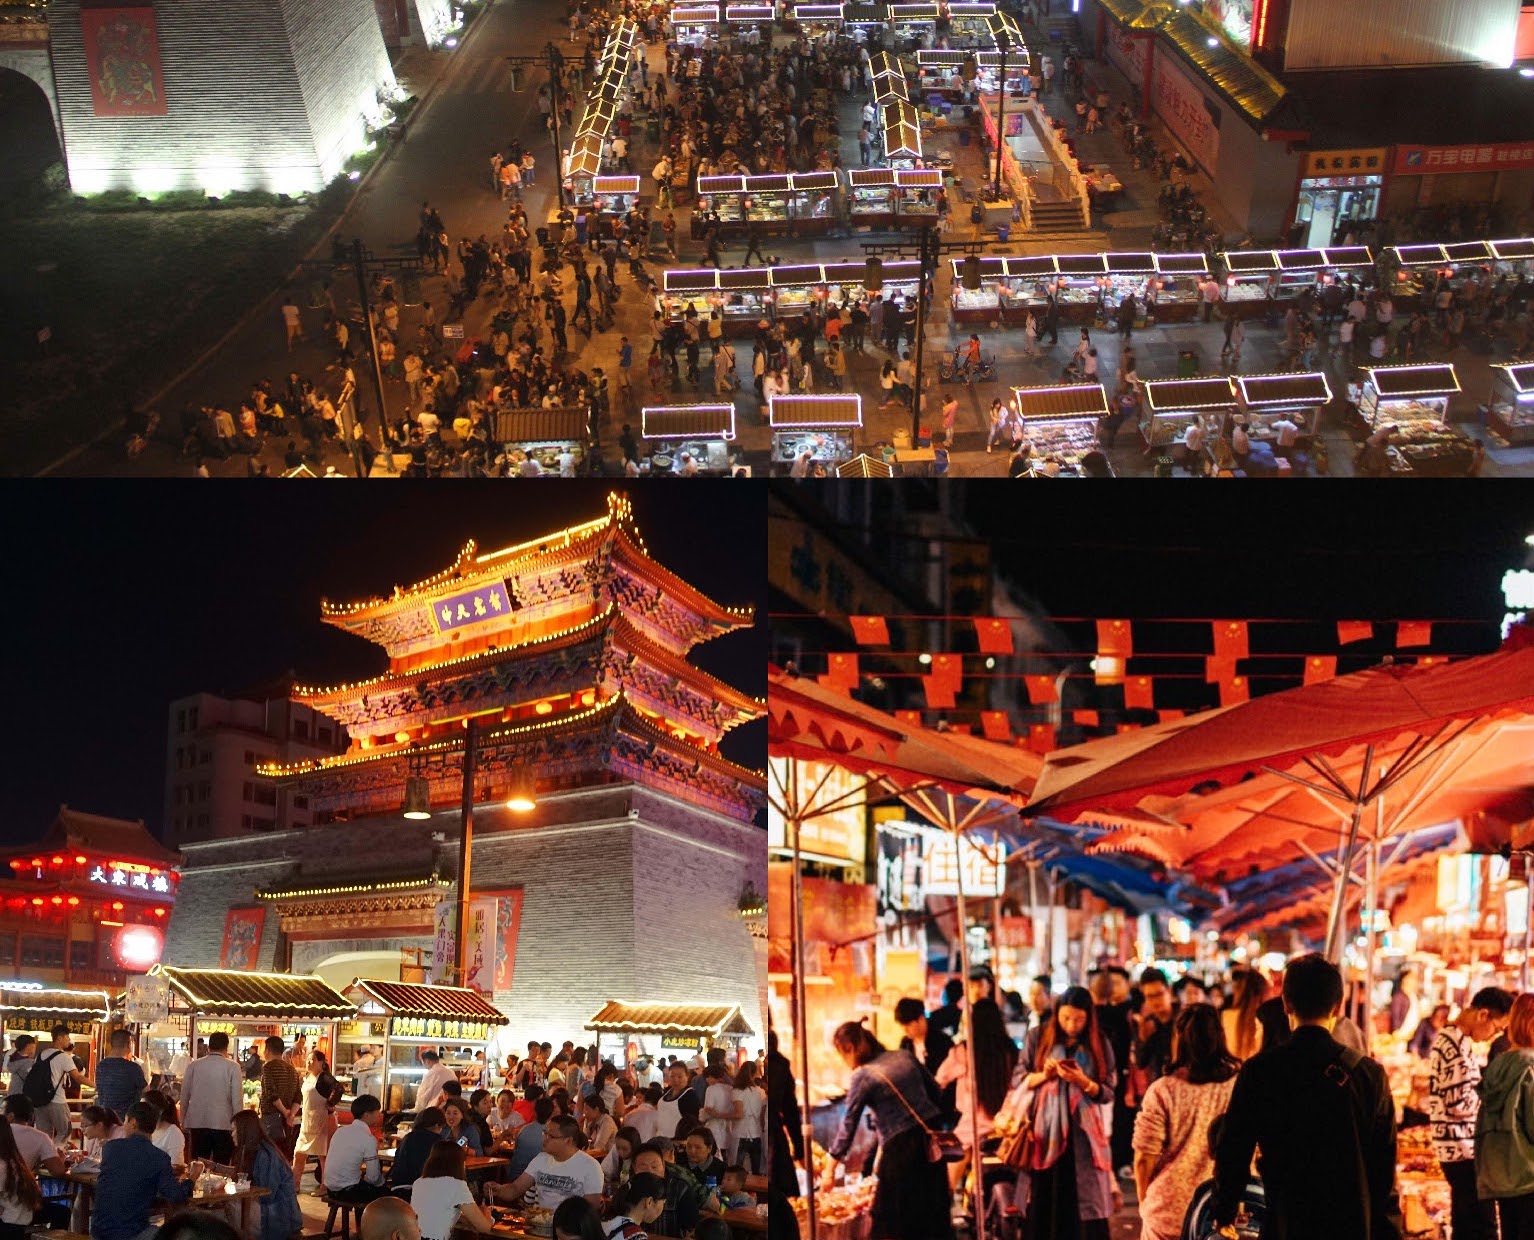 Night markets in China